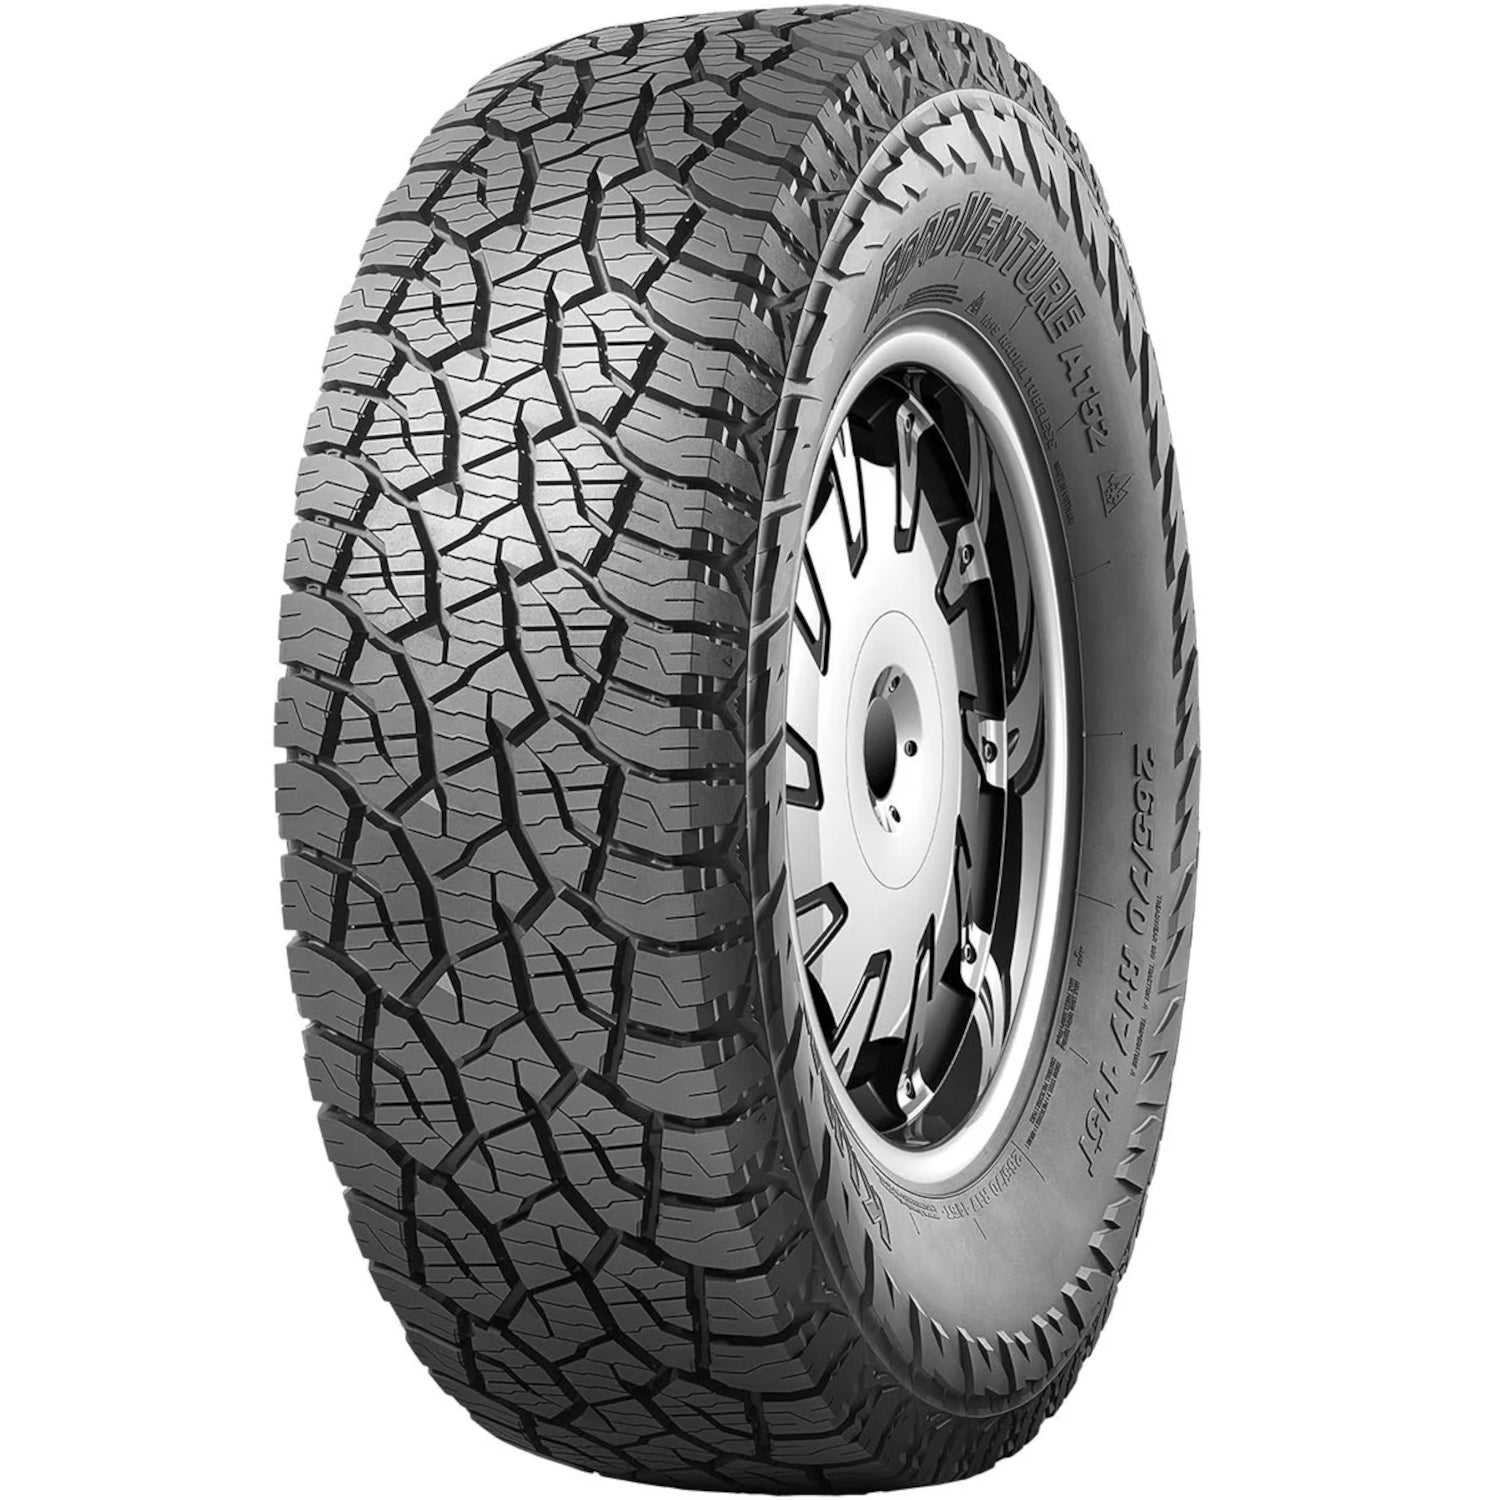 KUMHO ROAD VENTURE AT52 265/65R17 (30.6X10.4R 17) Tires